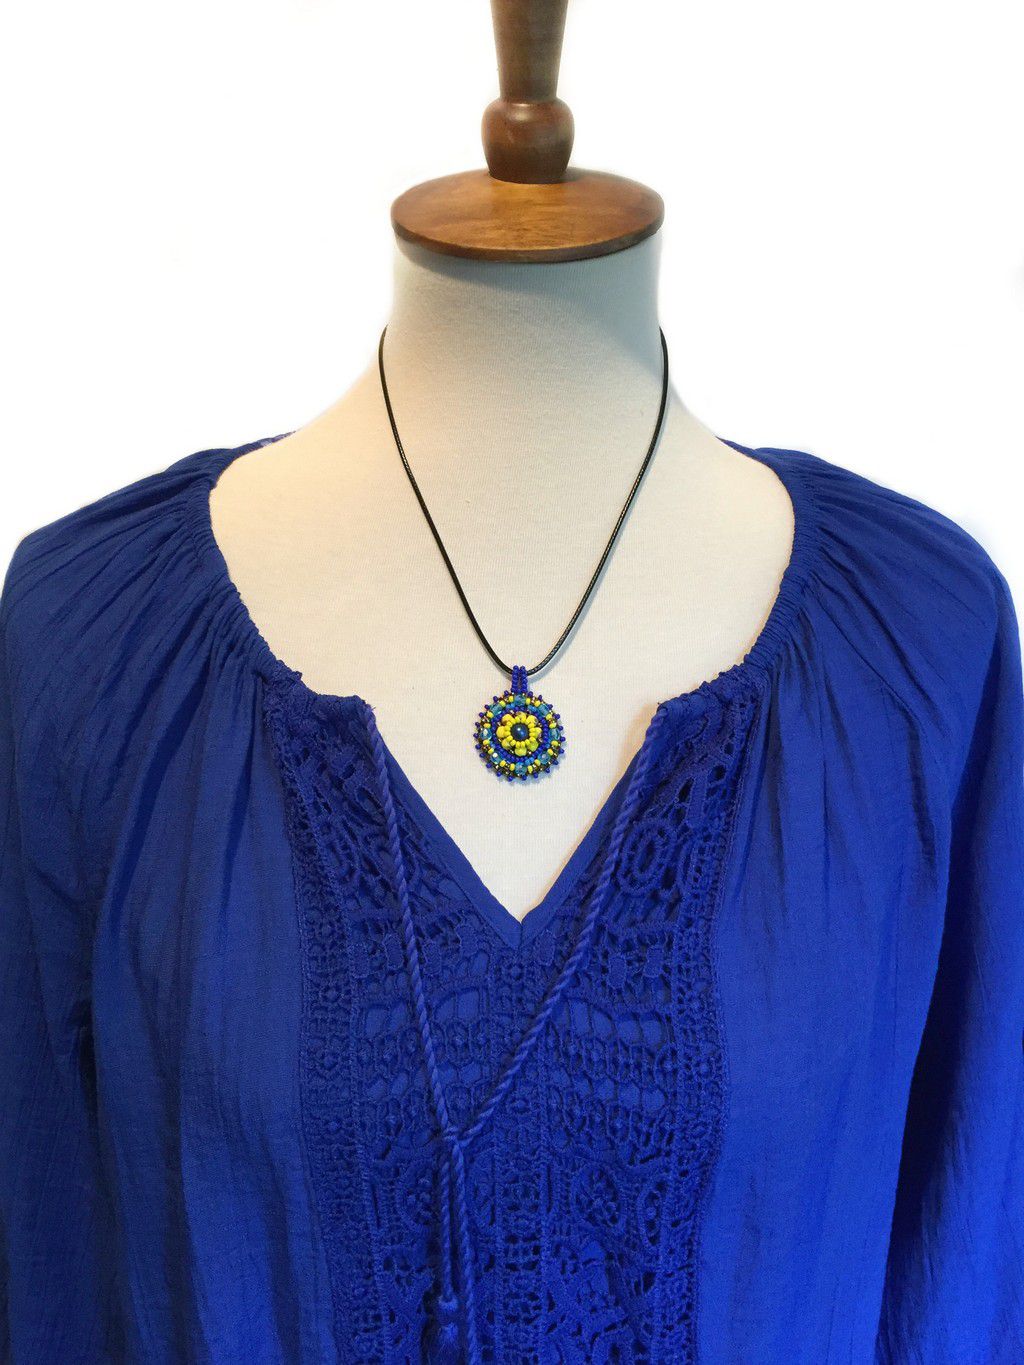 yellow and blue mandala necklace